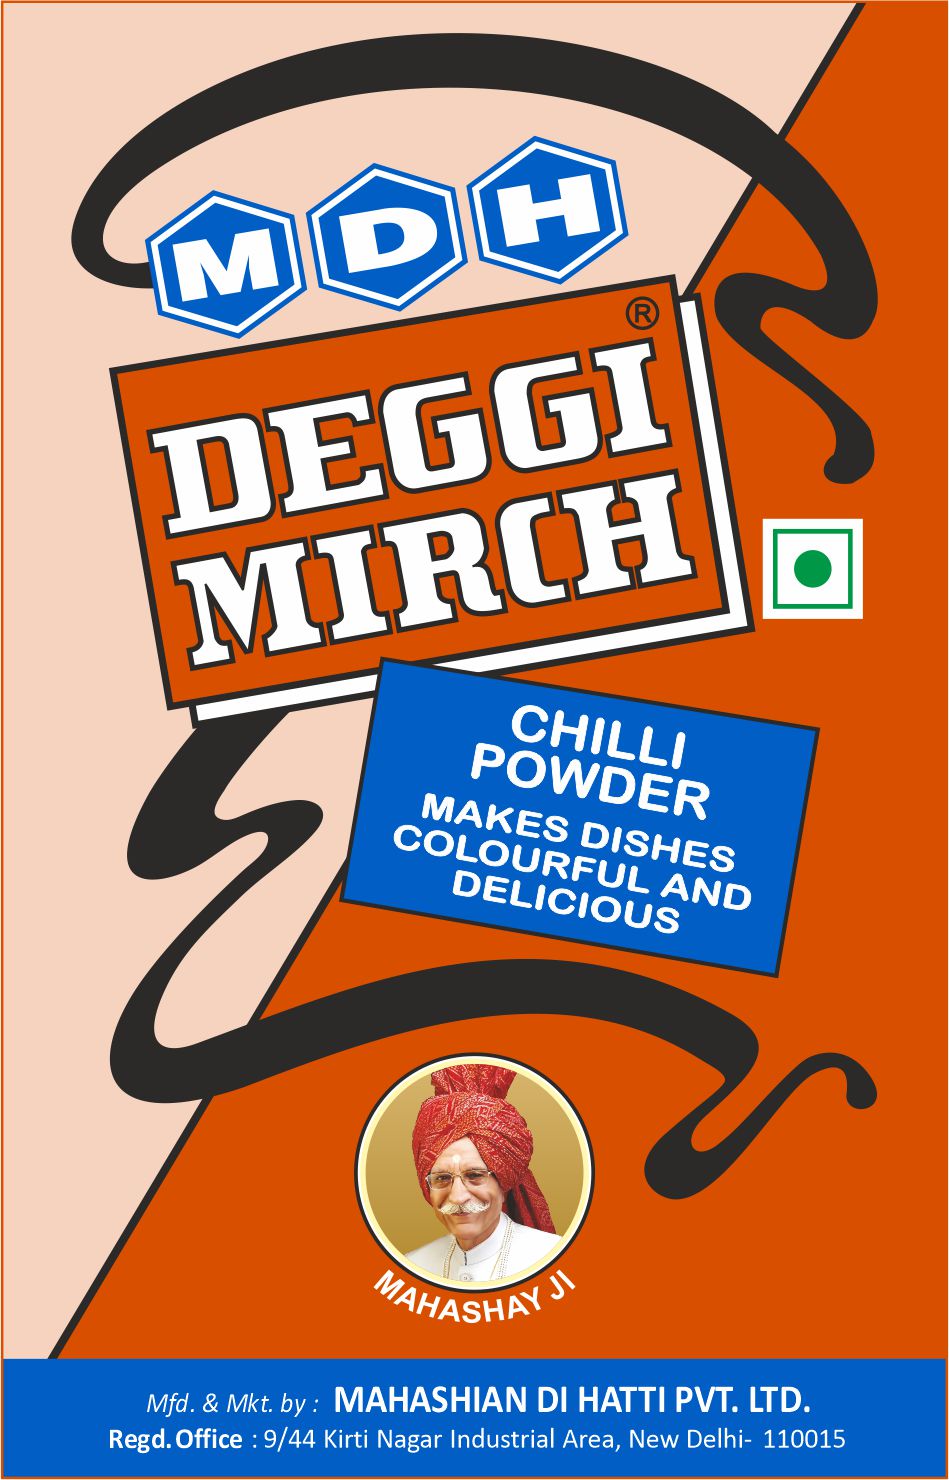 MDH-Deggi Mirch-100g